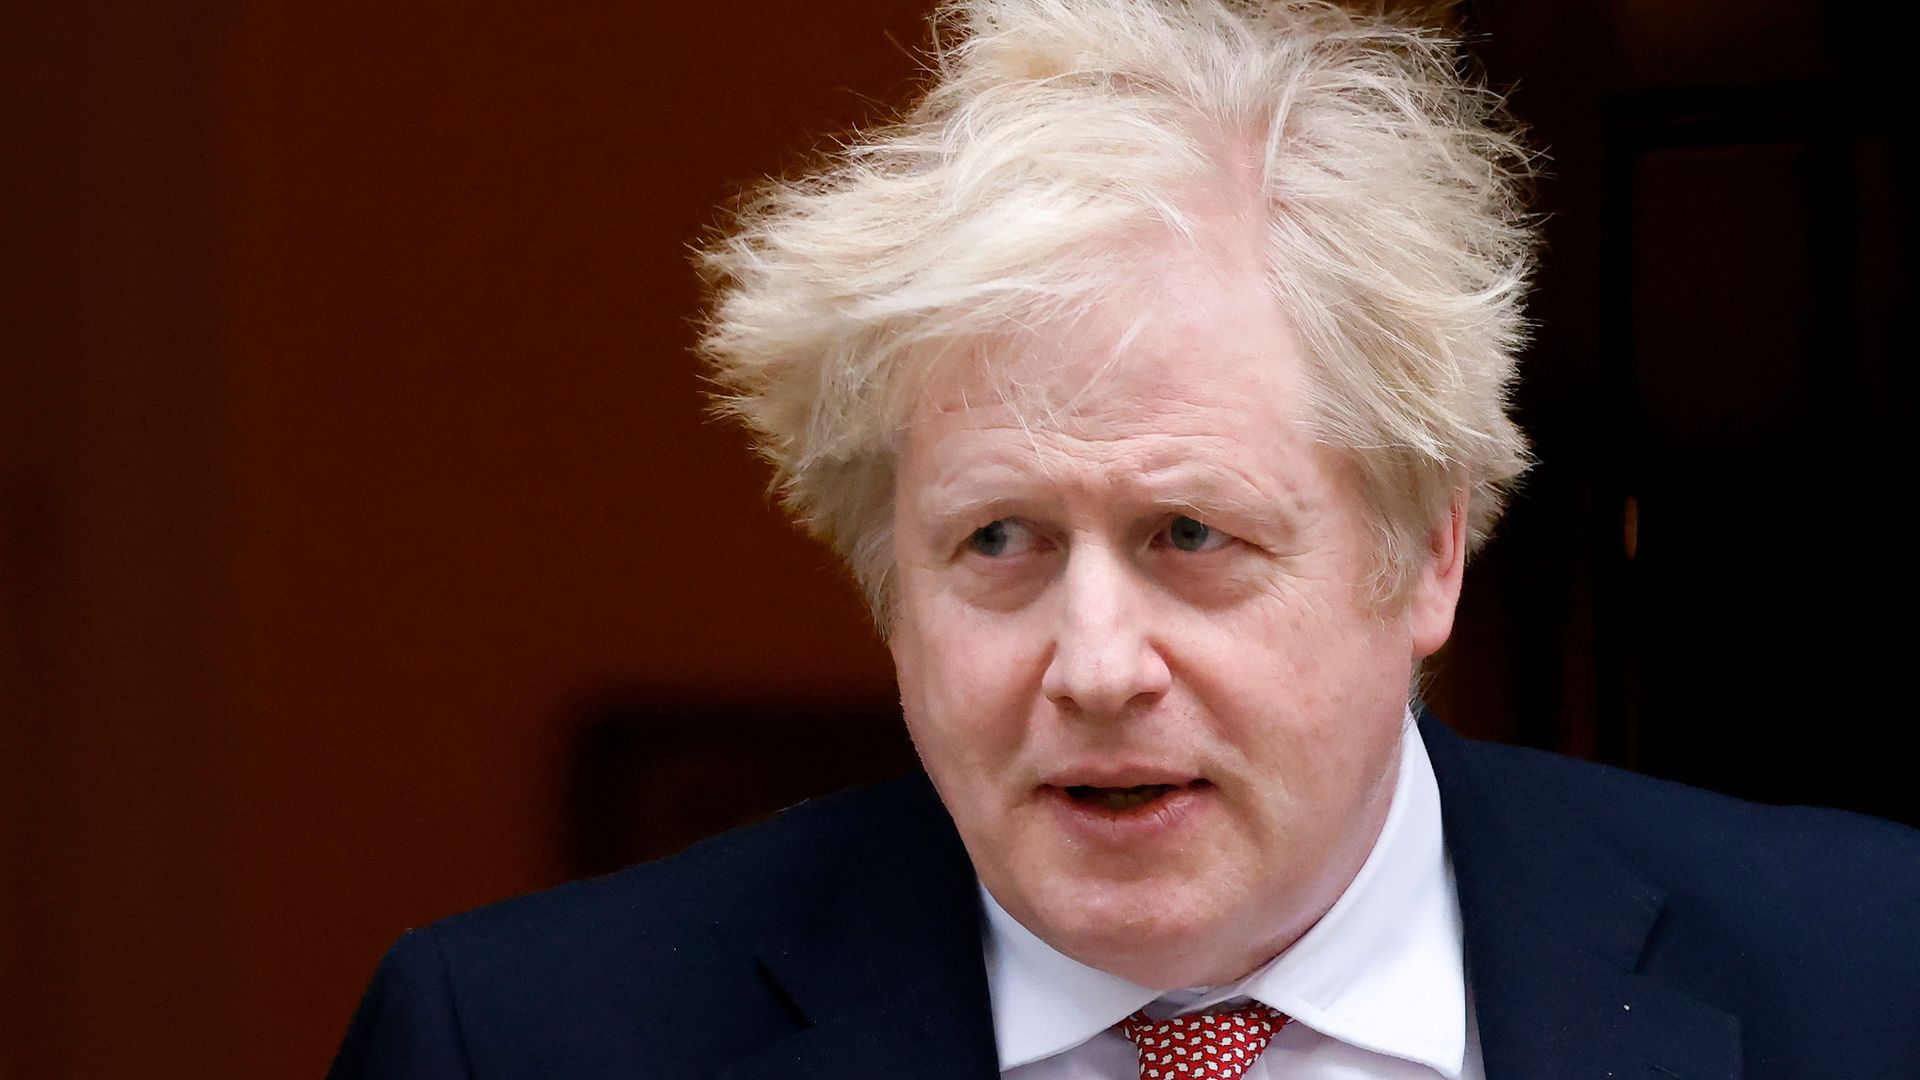 Photo of Boris Johnson's face and fluffy hair